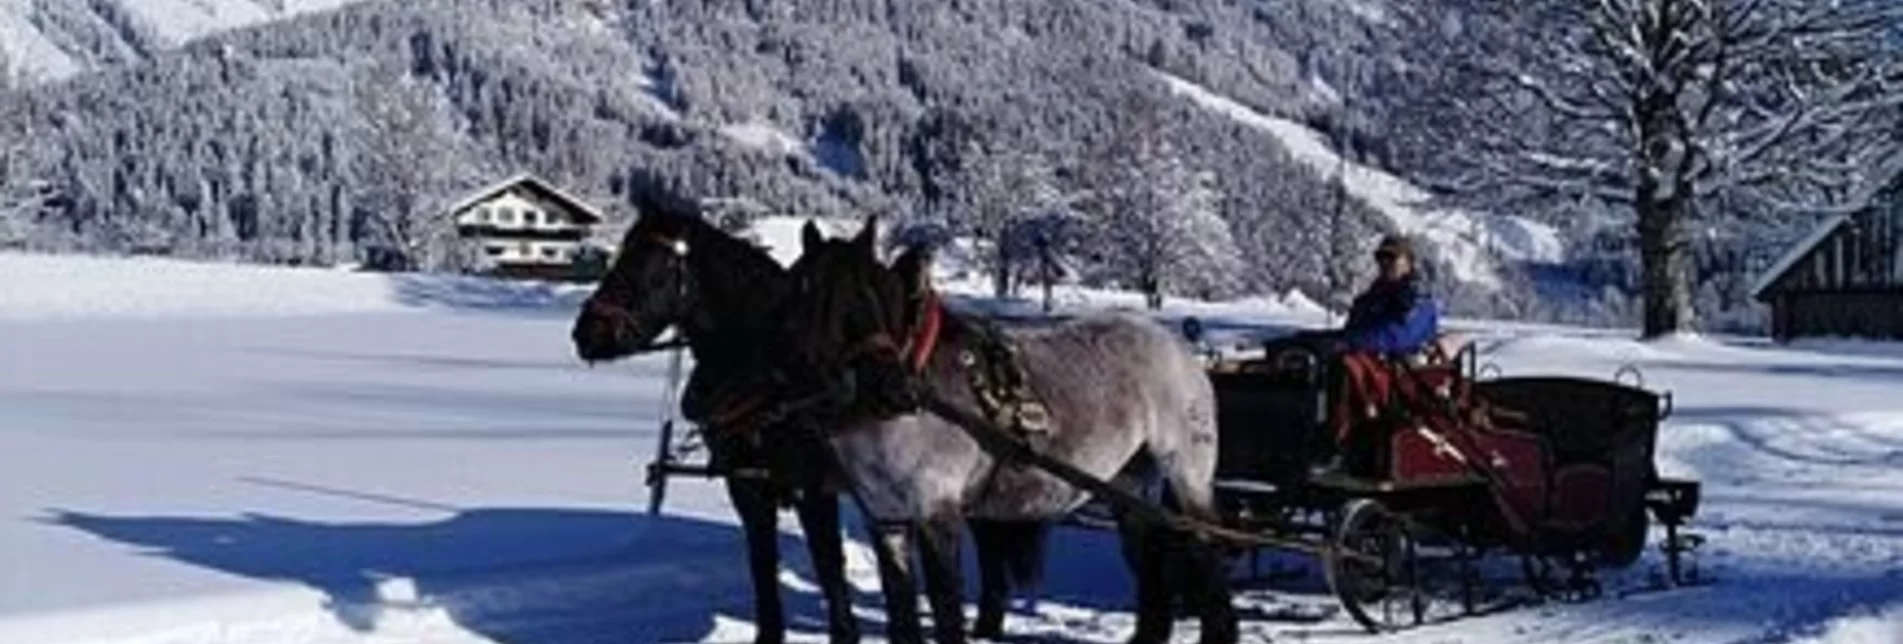 Horse Carriage Ride Horse Drawn Sleigh Rides Wagnerhof - Touren-Impression #1